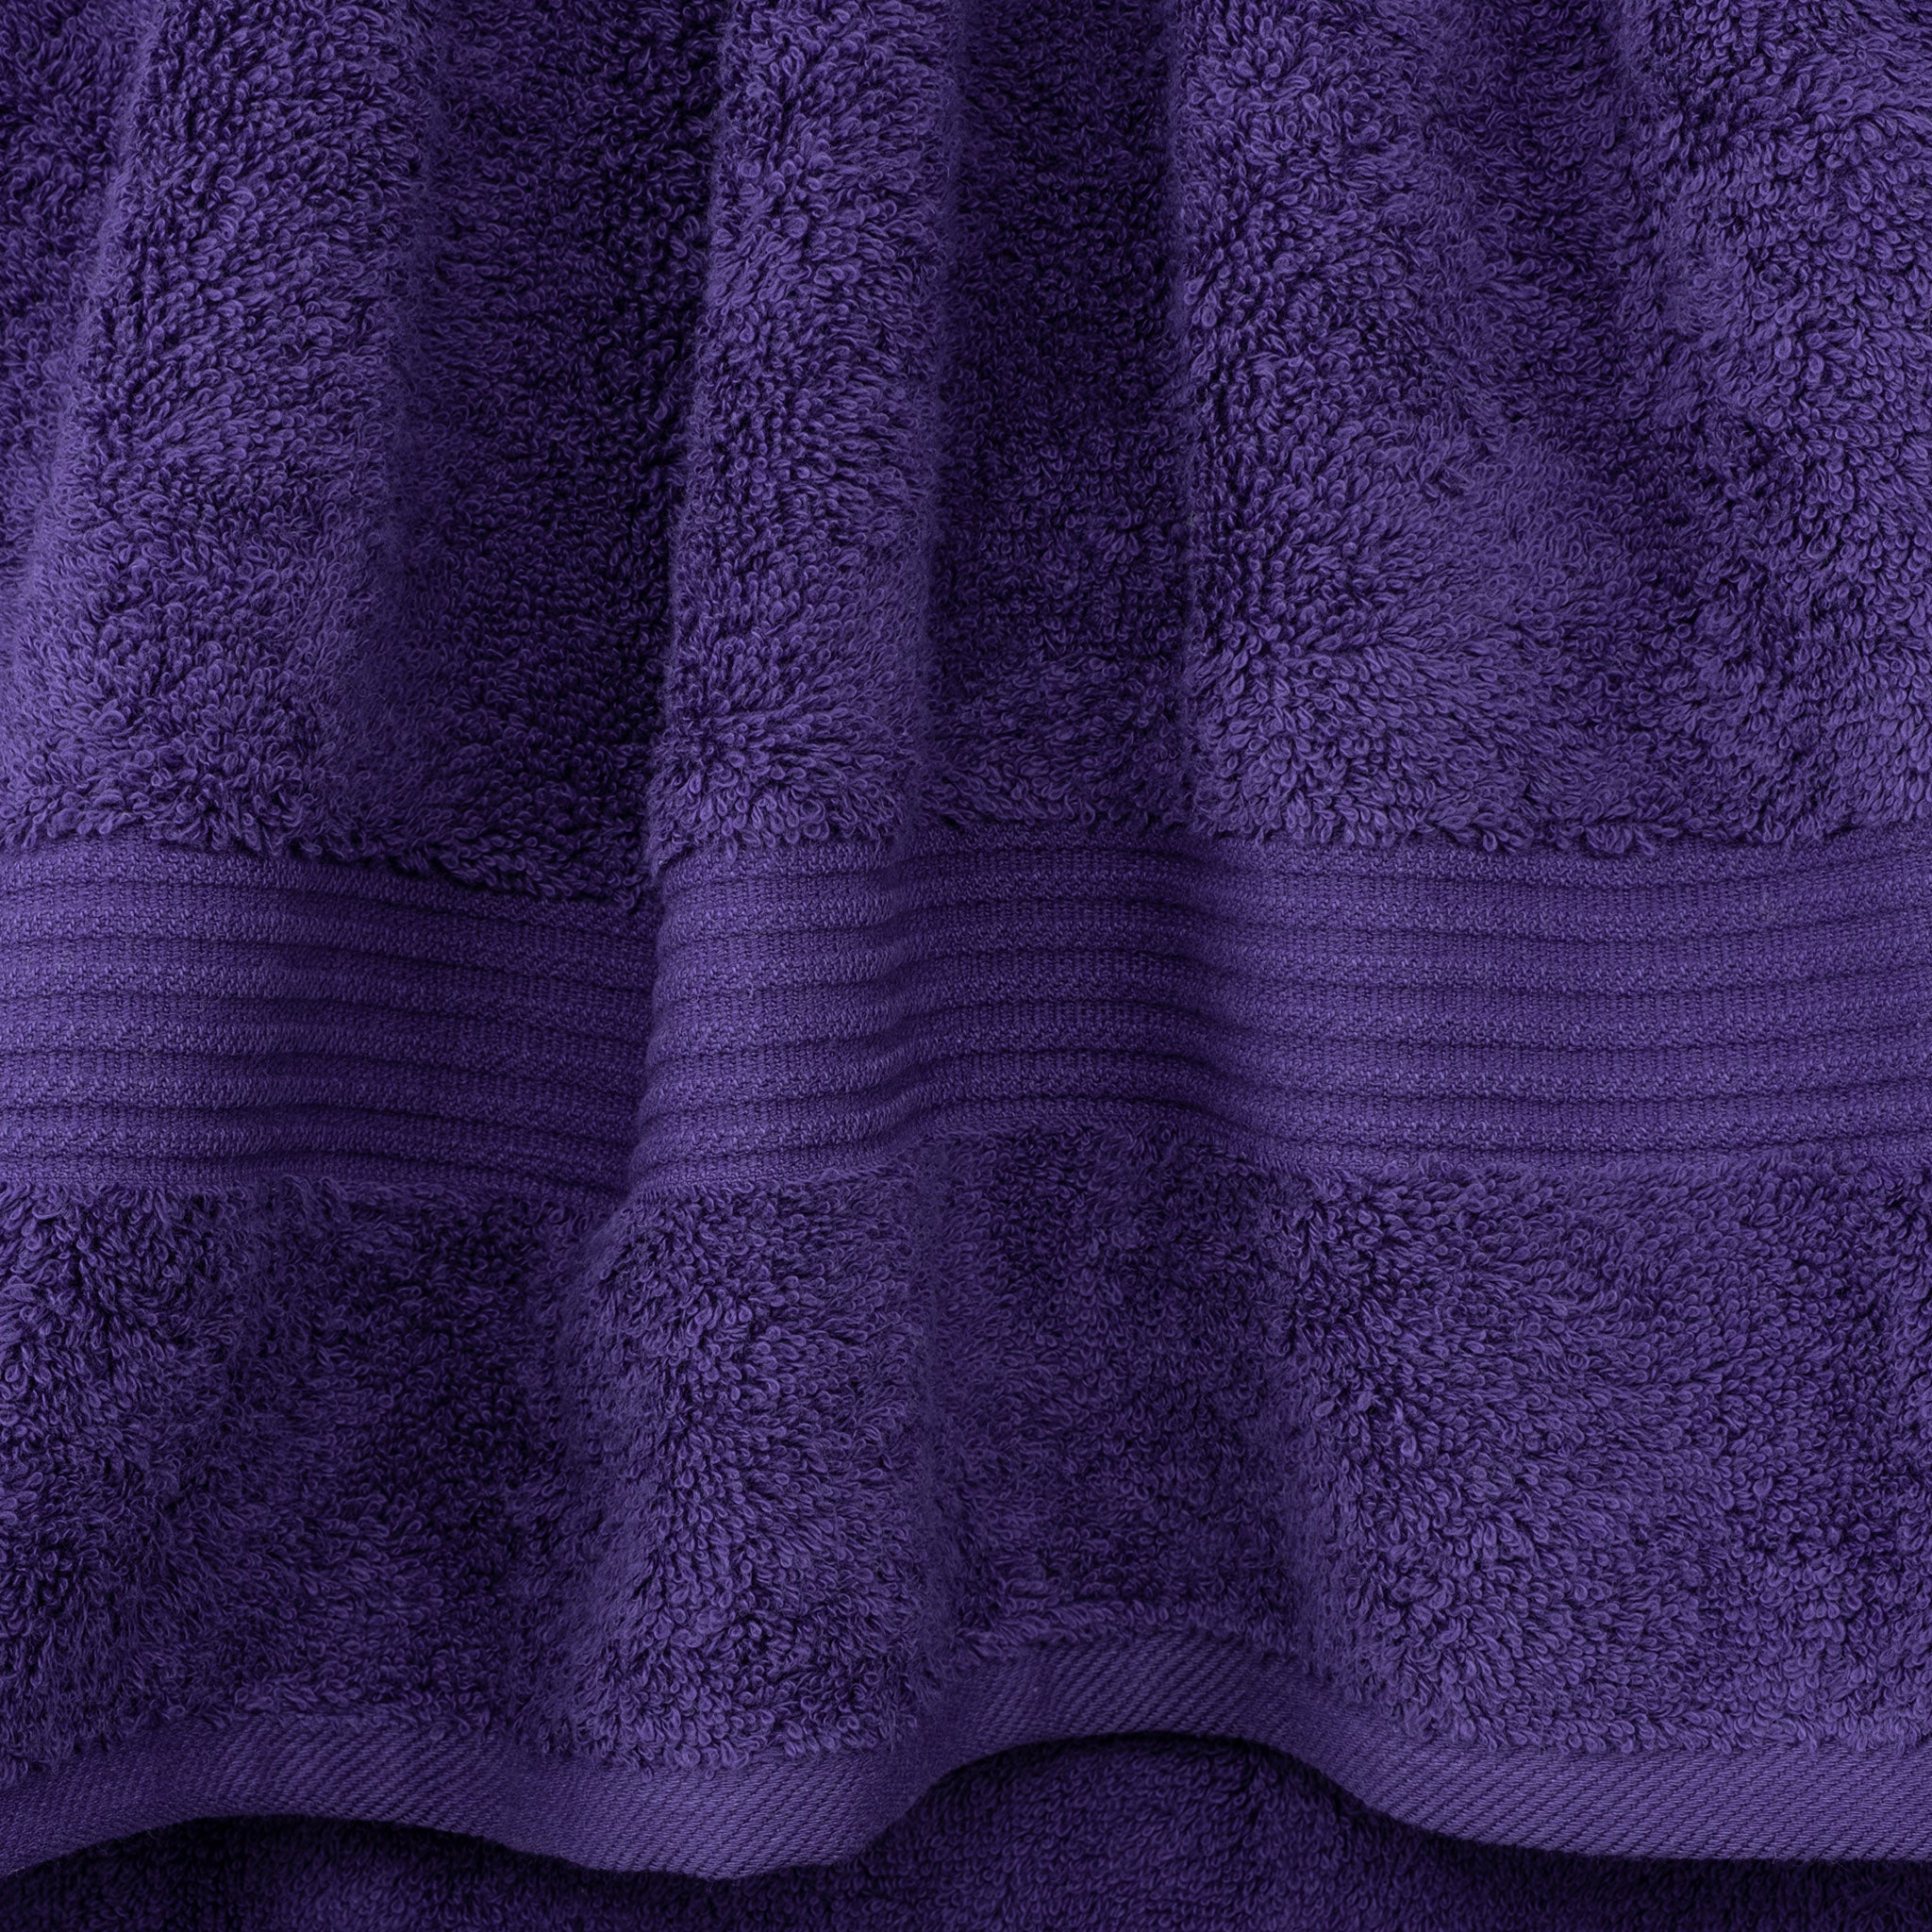 American Soft Linen Bekos 100% Cotton Turkish Towels, 4 Piece Hand Towel Set -purple-03